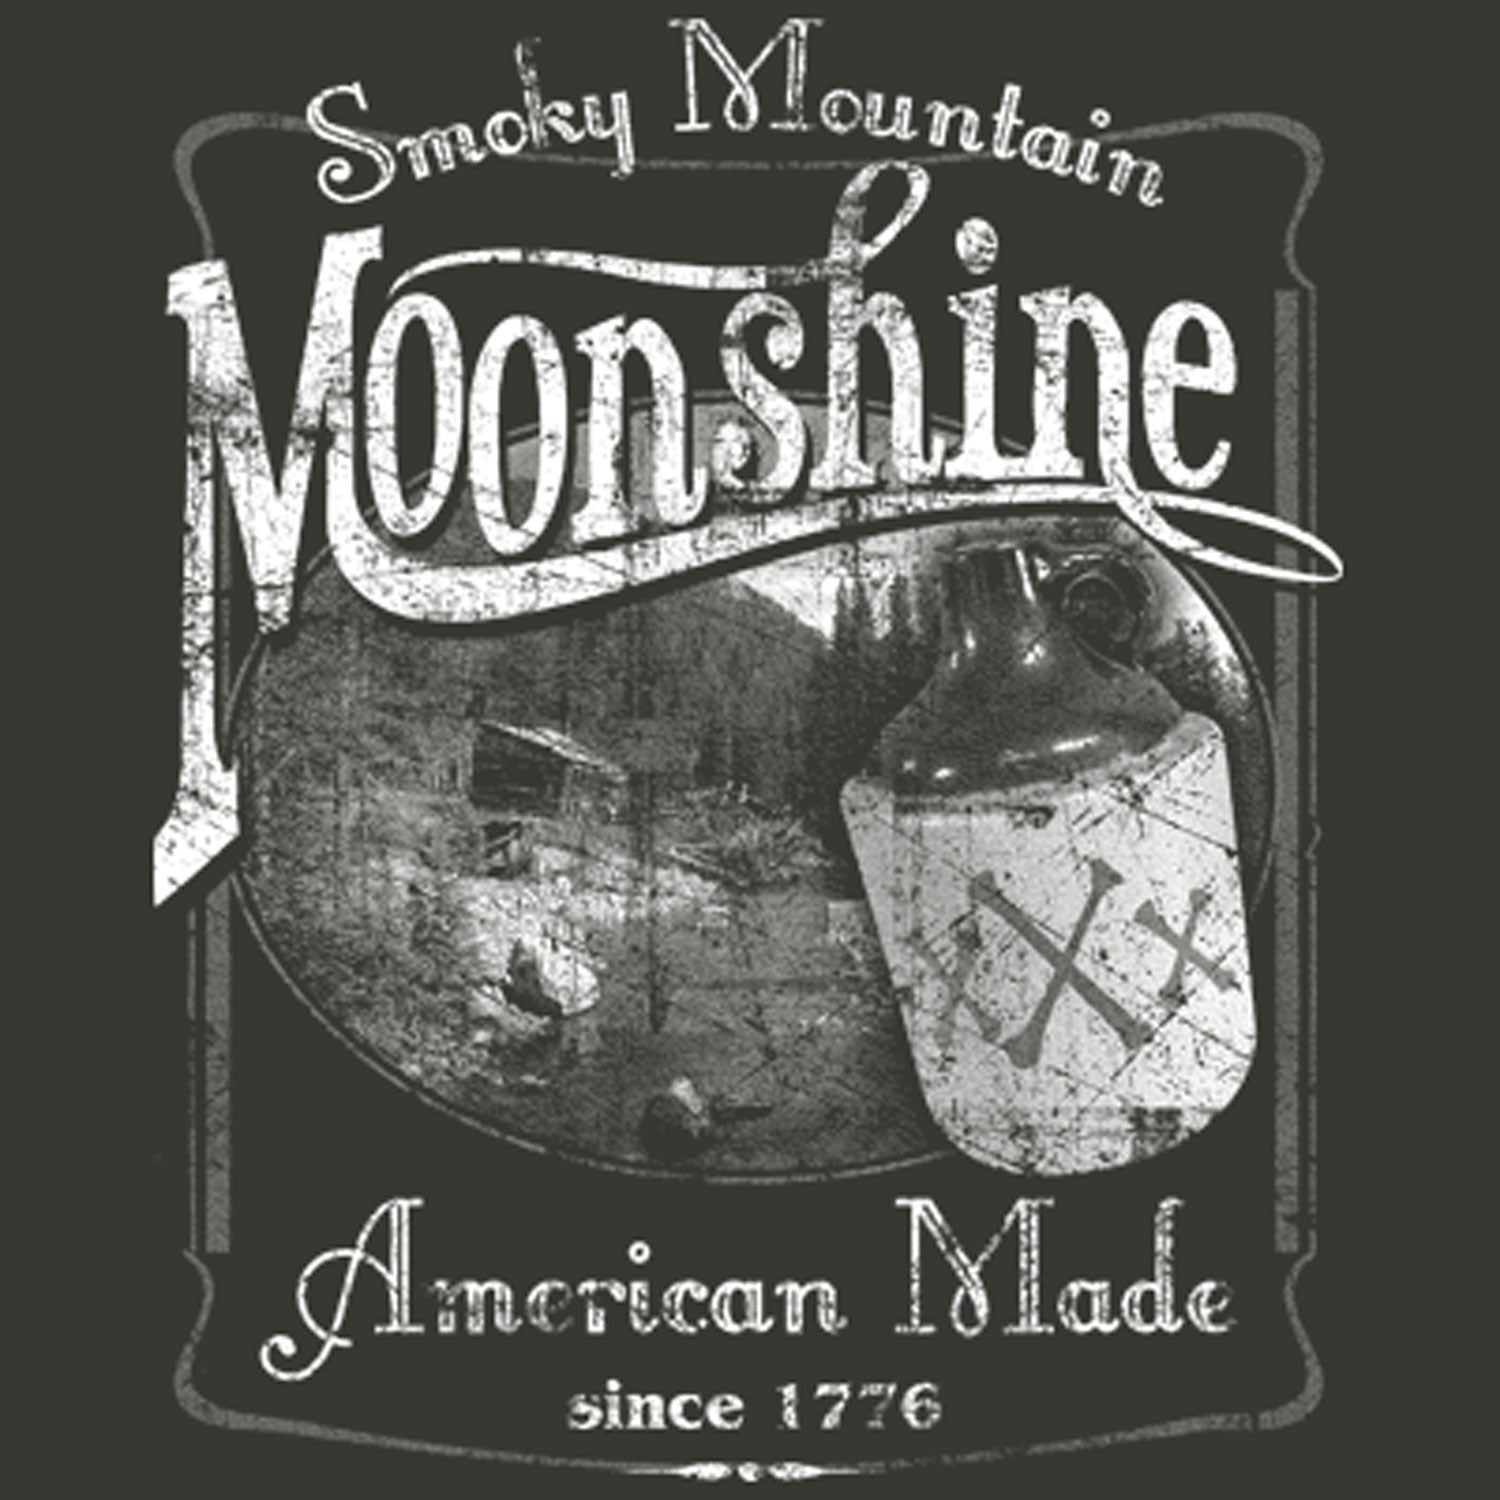 Smoky Mountain Moonshine American Made Printed T-Shirt-Black